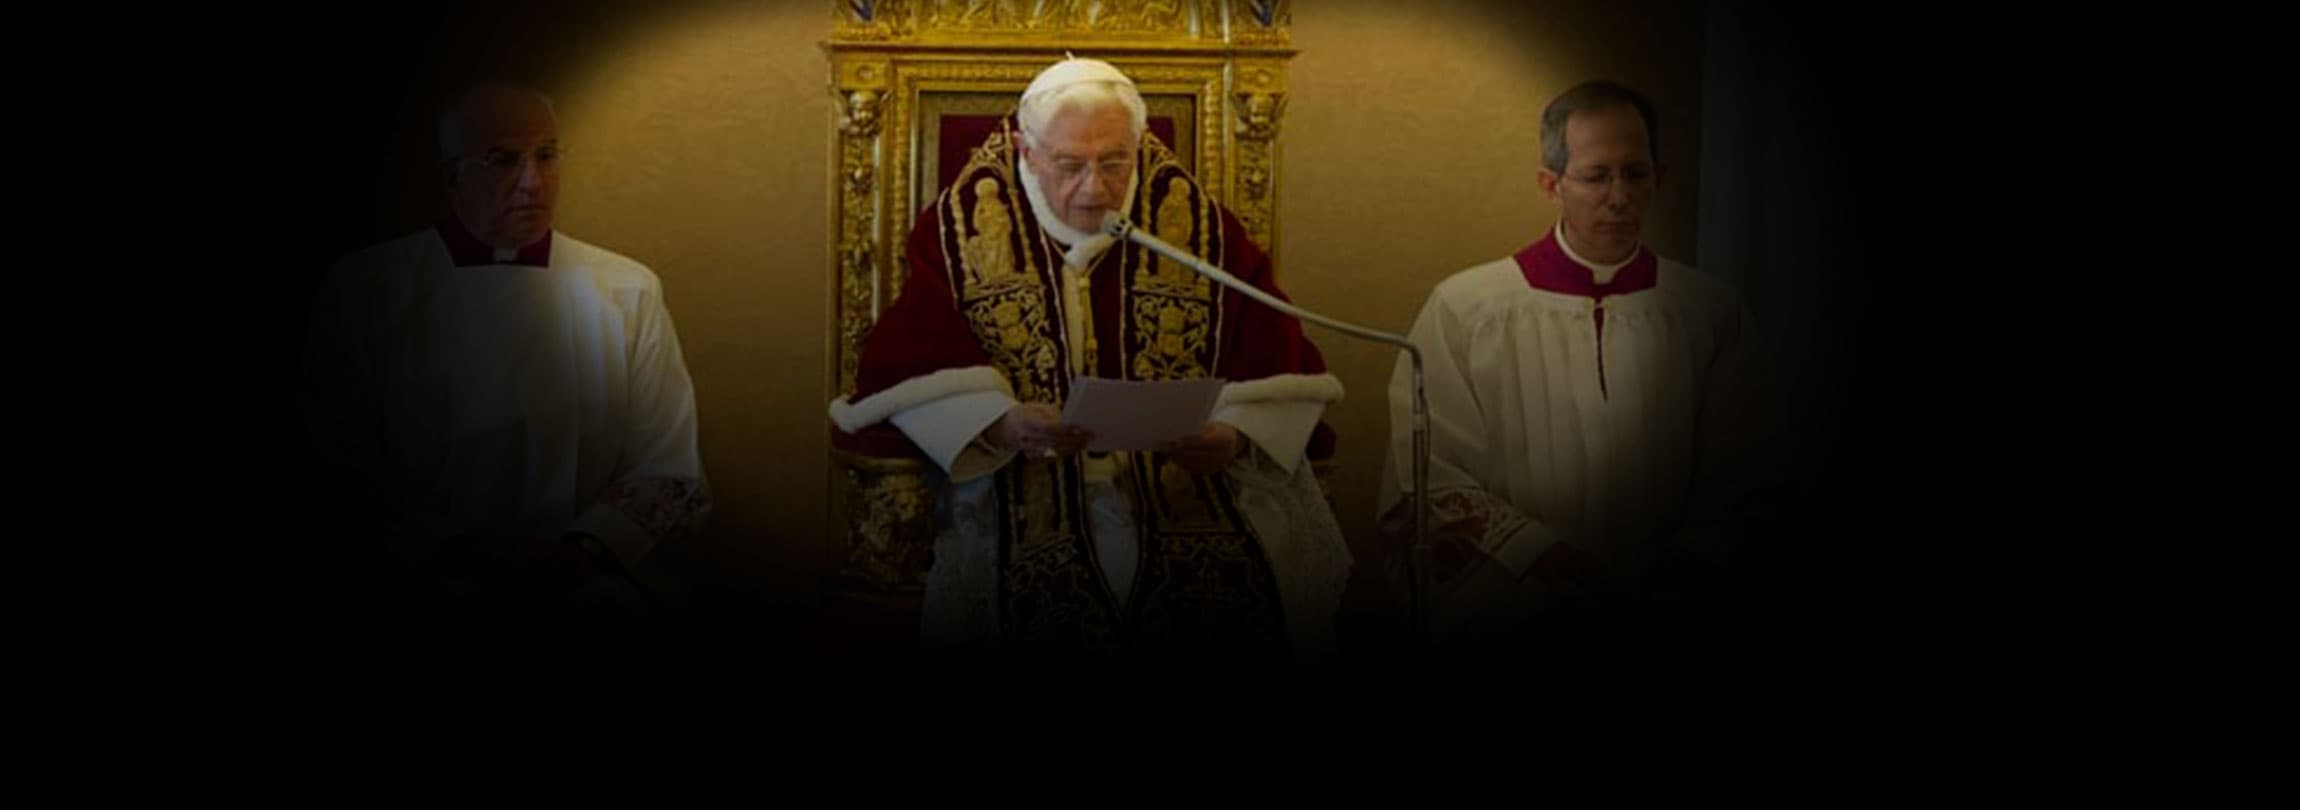 Bento XVI anuncia sua renúncia como Papa